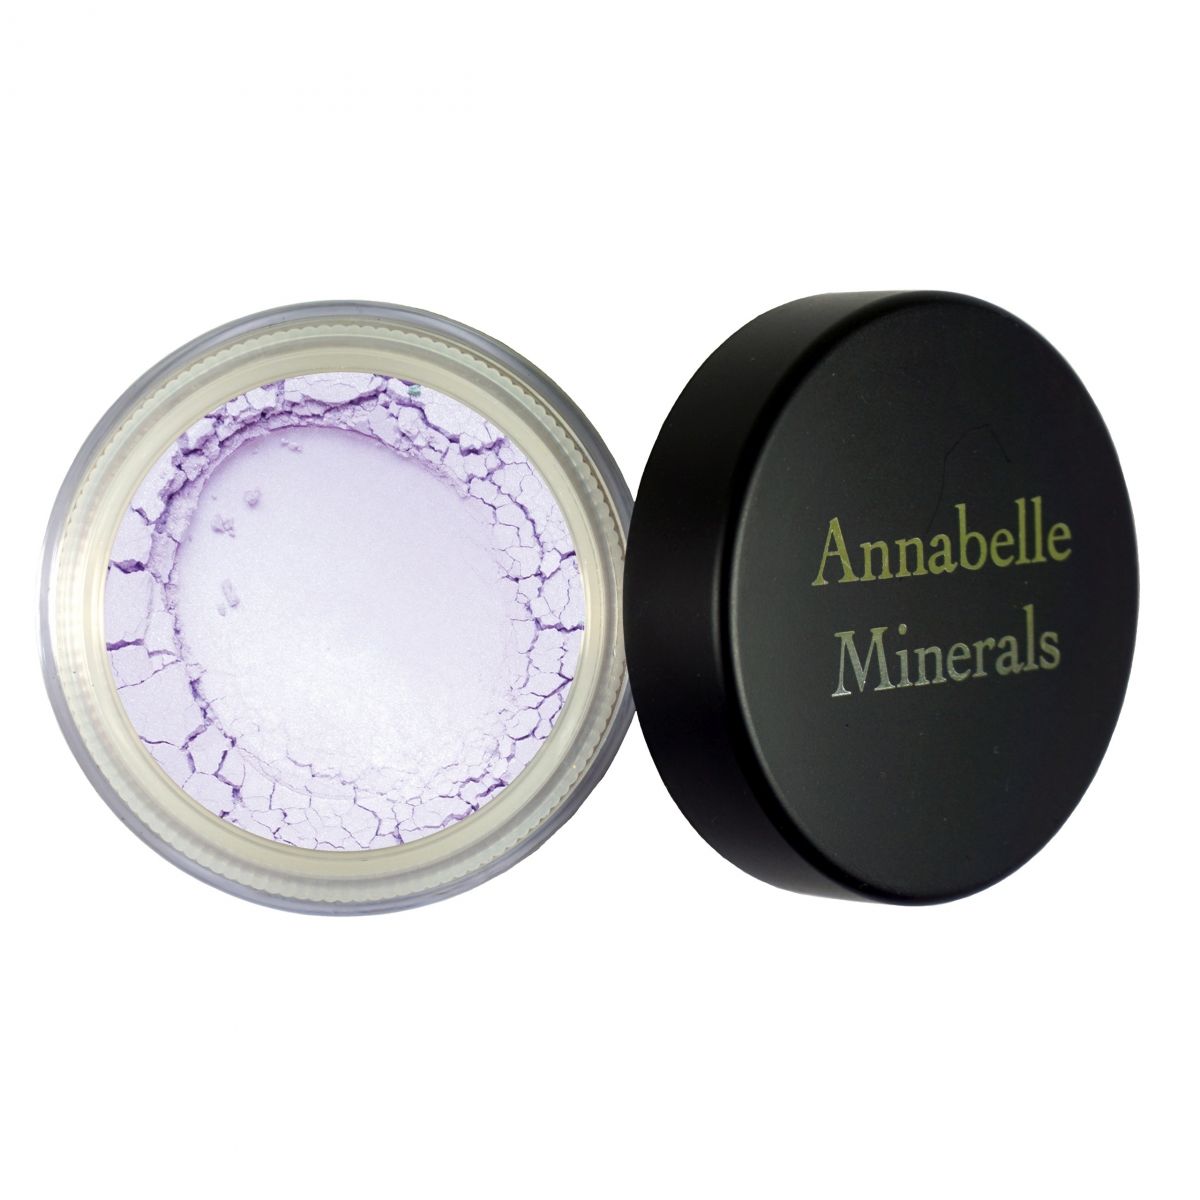 Annabelle Minerals Cień mineralny w odcieniu Lilac - 3g